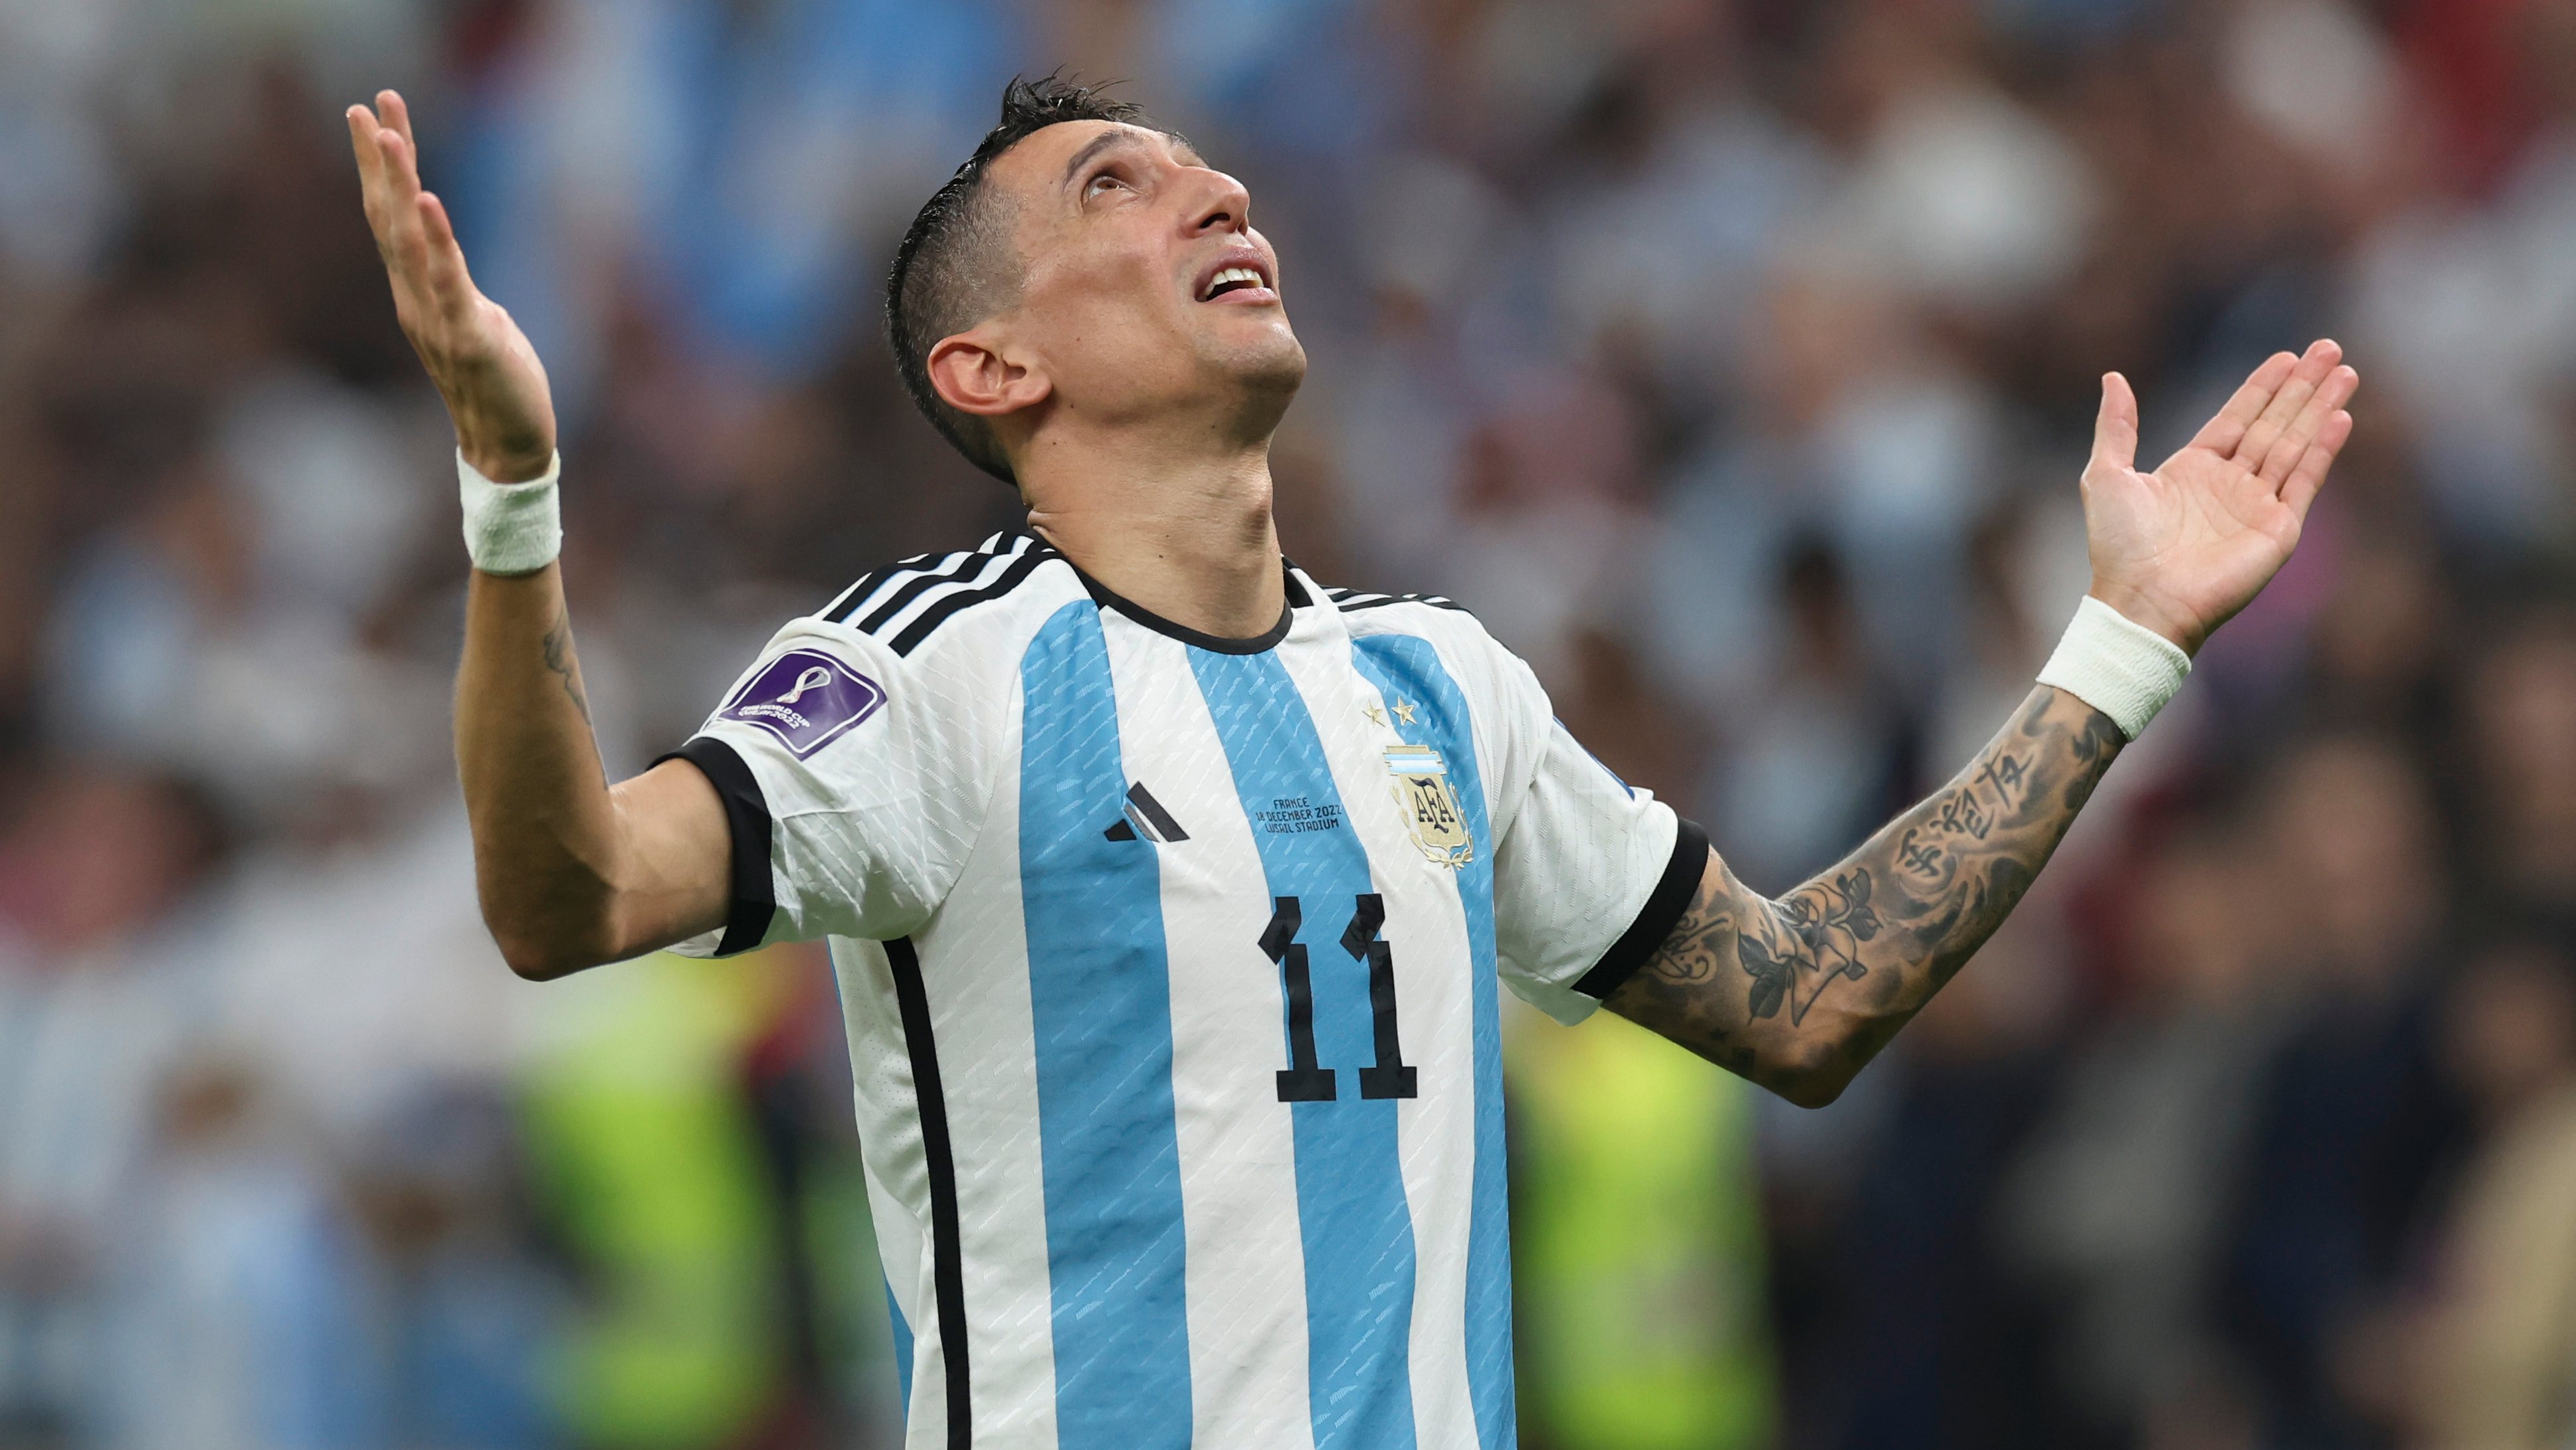 Copa 2022: Di María se emociona após marcar pela Argentina na final